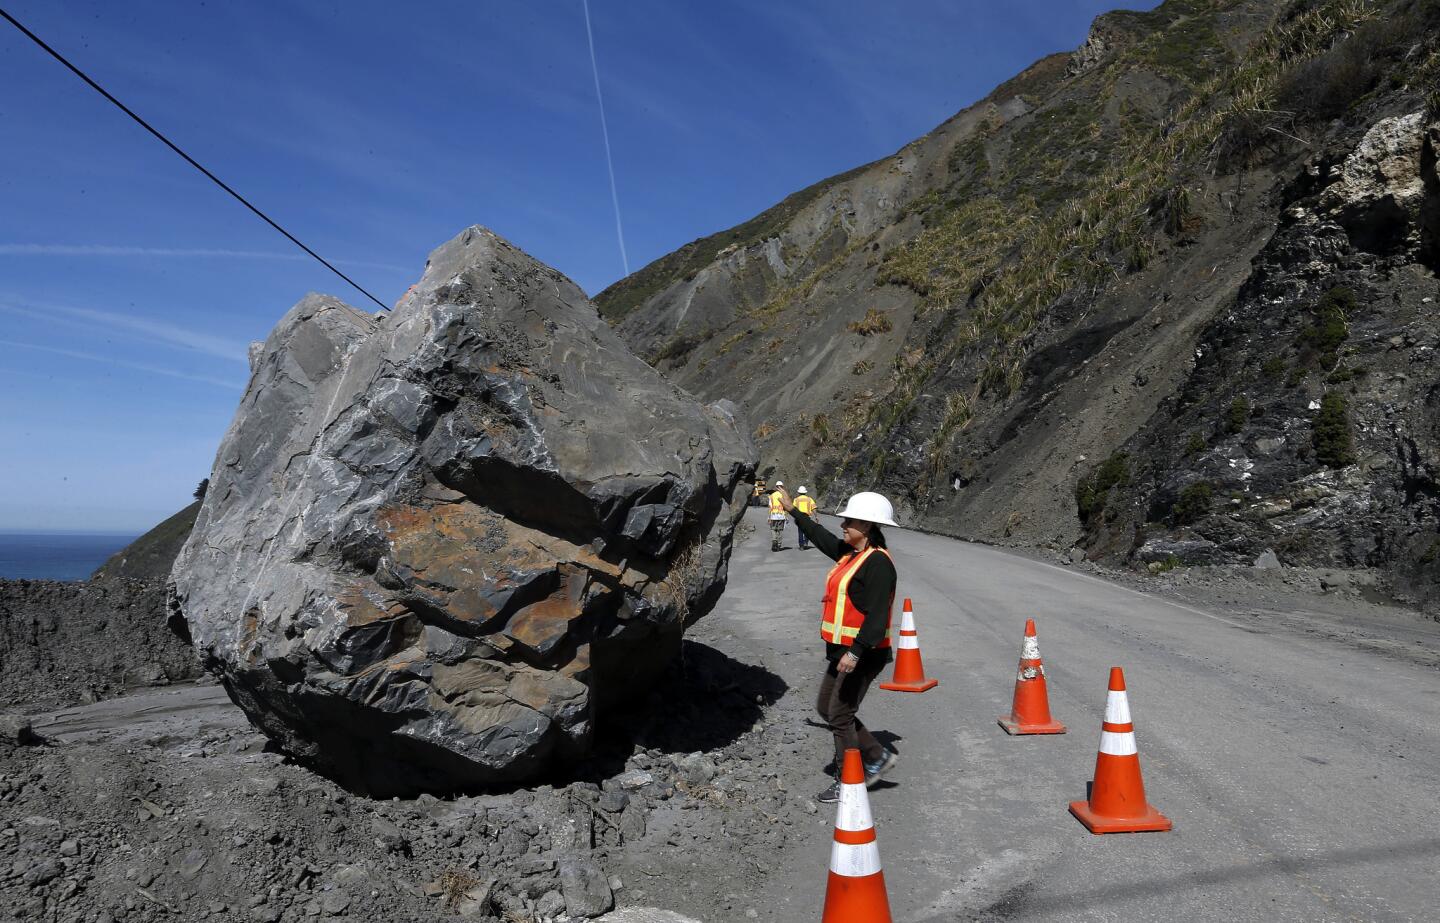 Highway closure isolates Big Sur